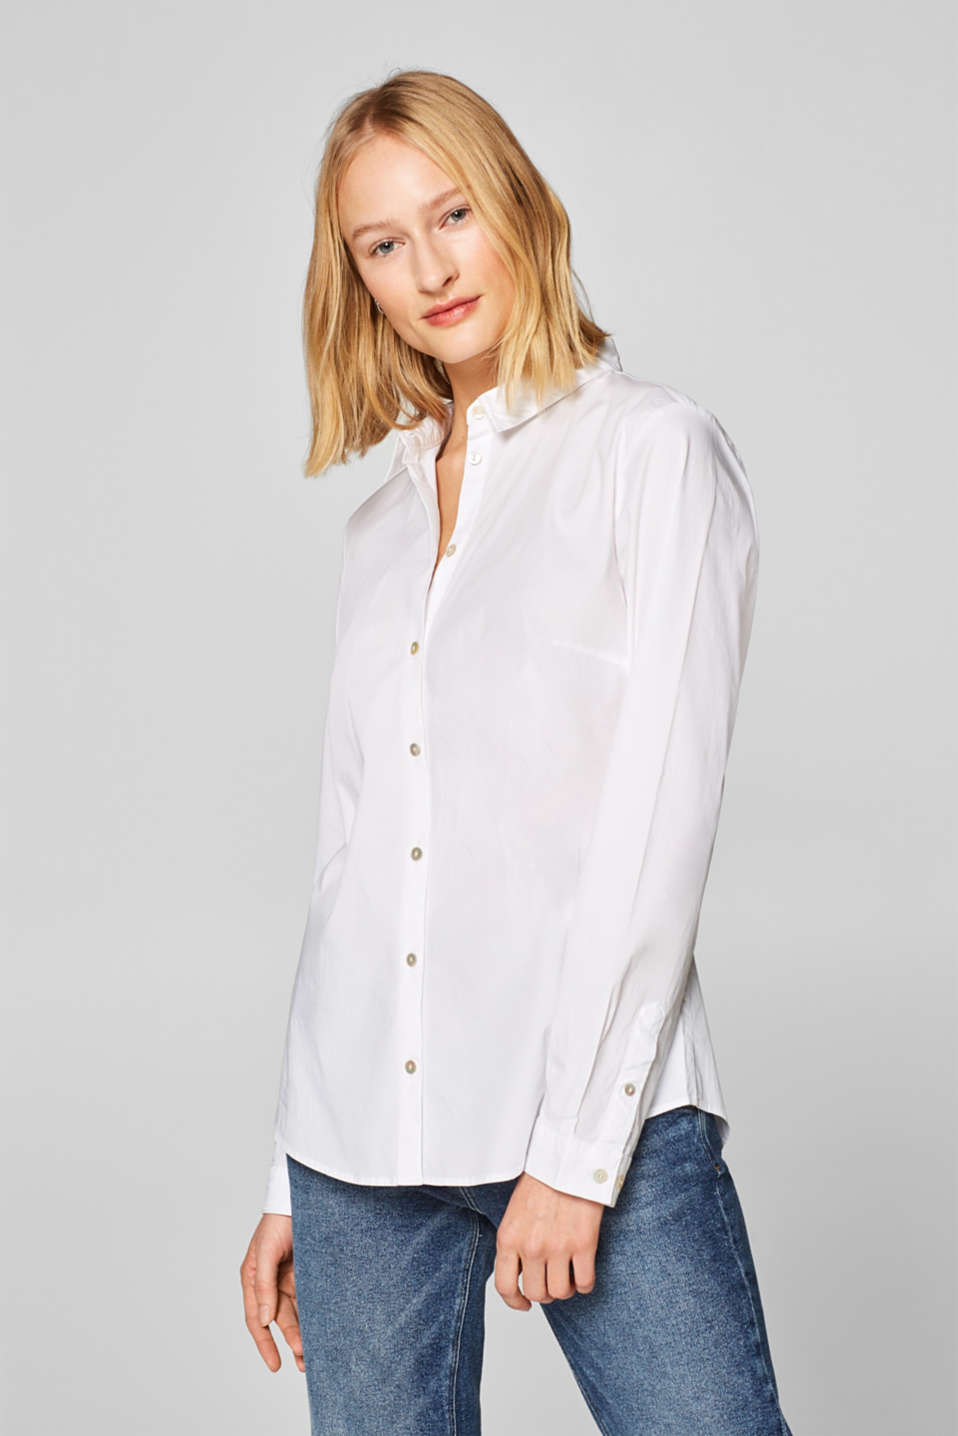 Esprit - Stretch cotton blouse with organic cotton at our Online Shop